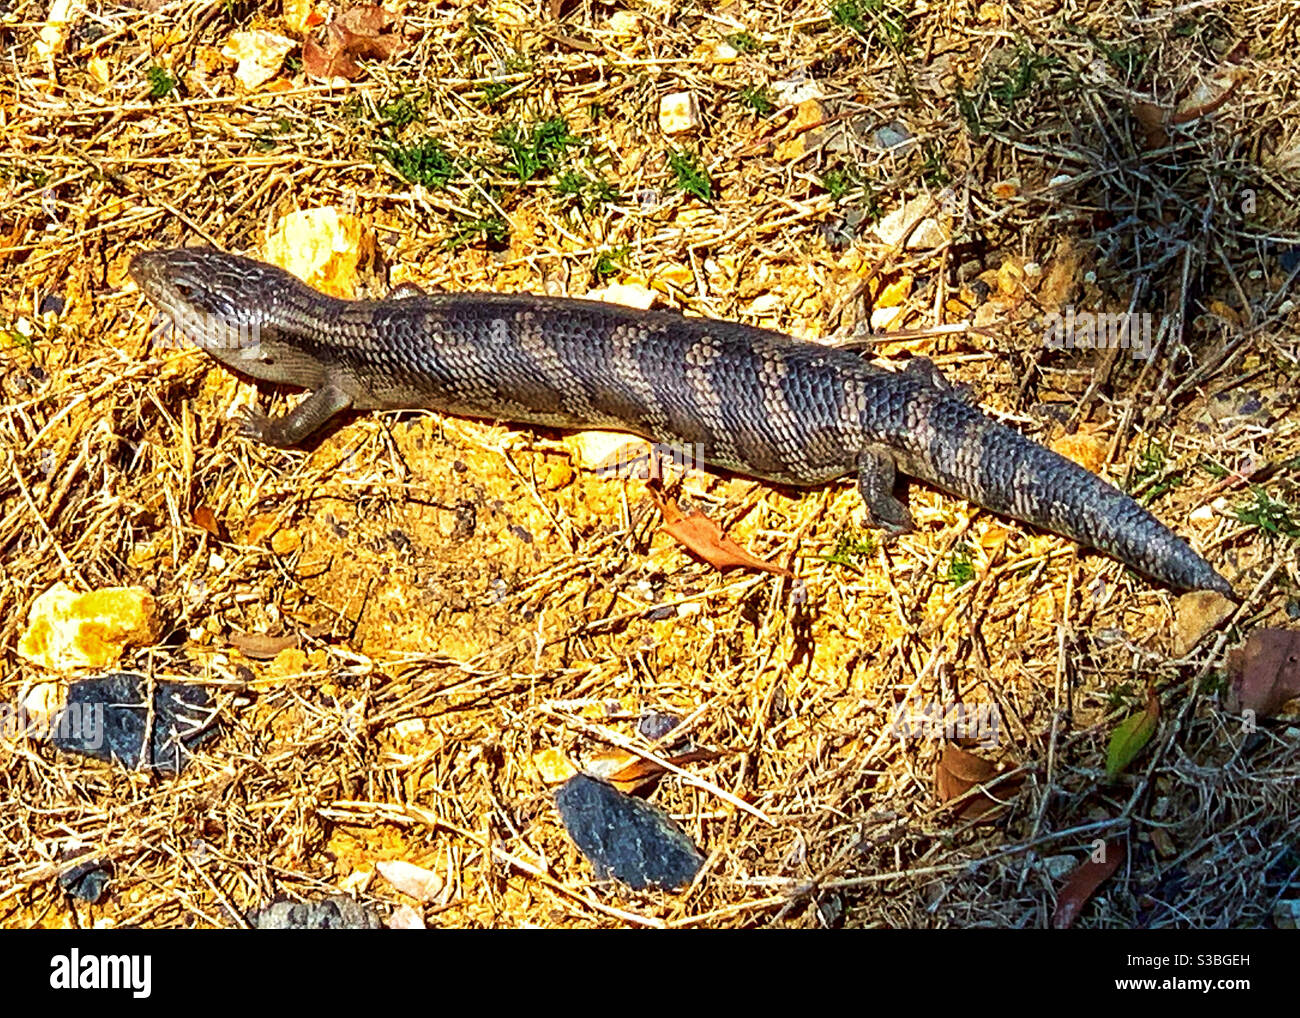 A plump looking Blue Tongue Lizard sunning itself, Australia Stock Photo